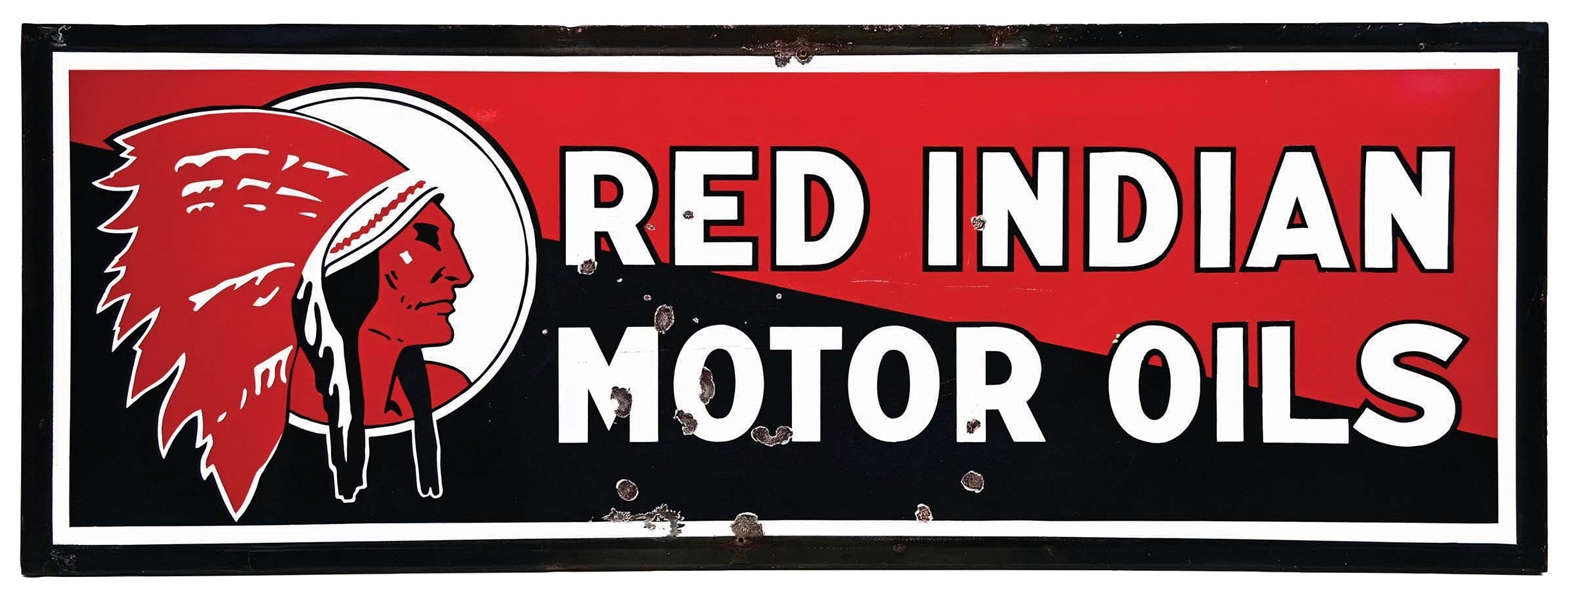 RED INDIAN MOTOR OILS SELF-FRAMED PORCELAIN SIGN W/ NATIVE AMERICAN GRAPHIC.